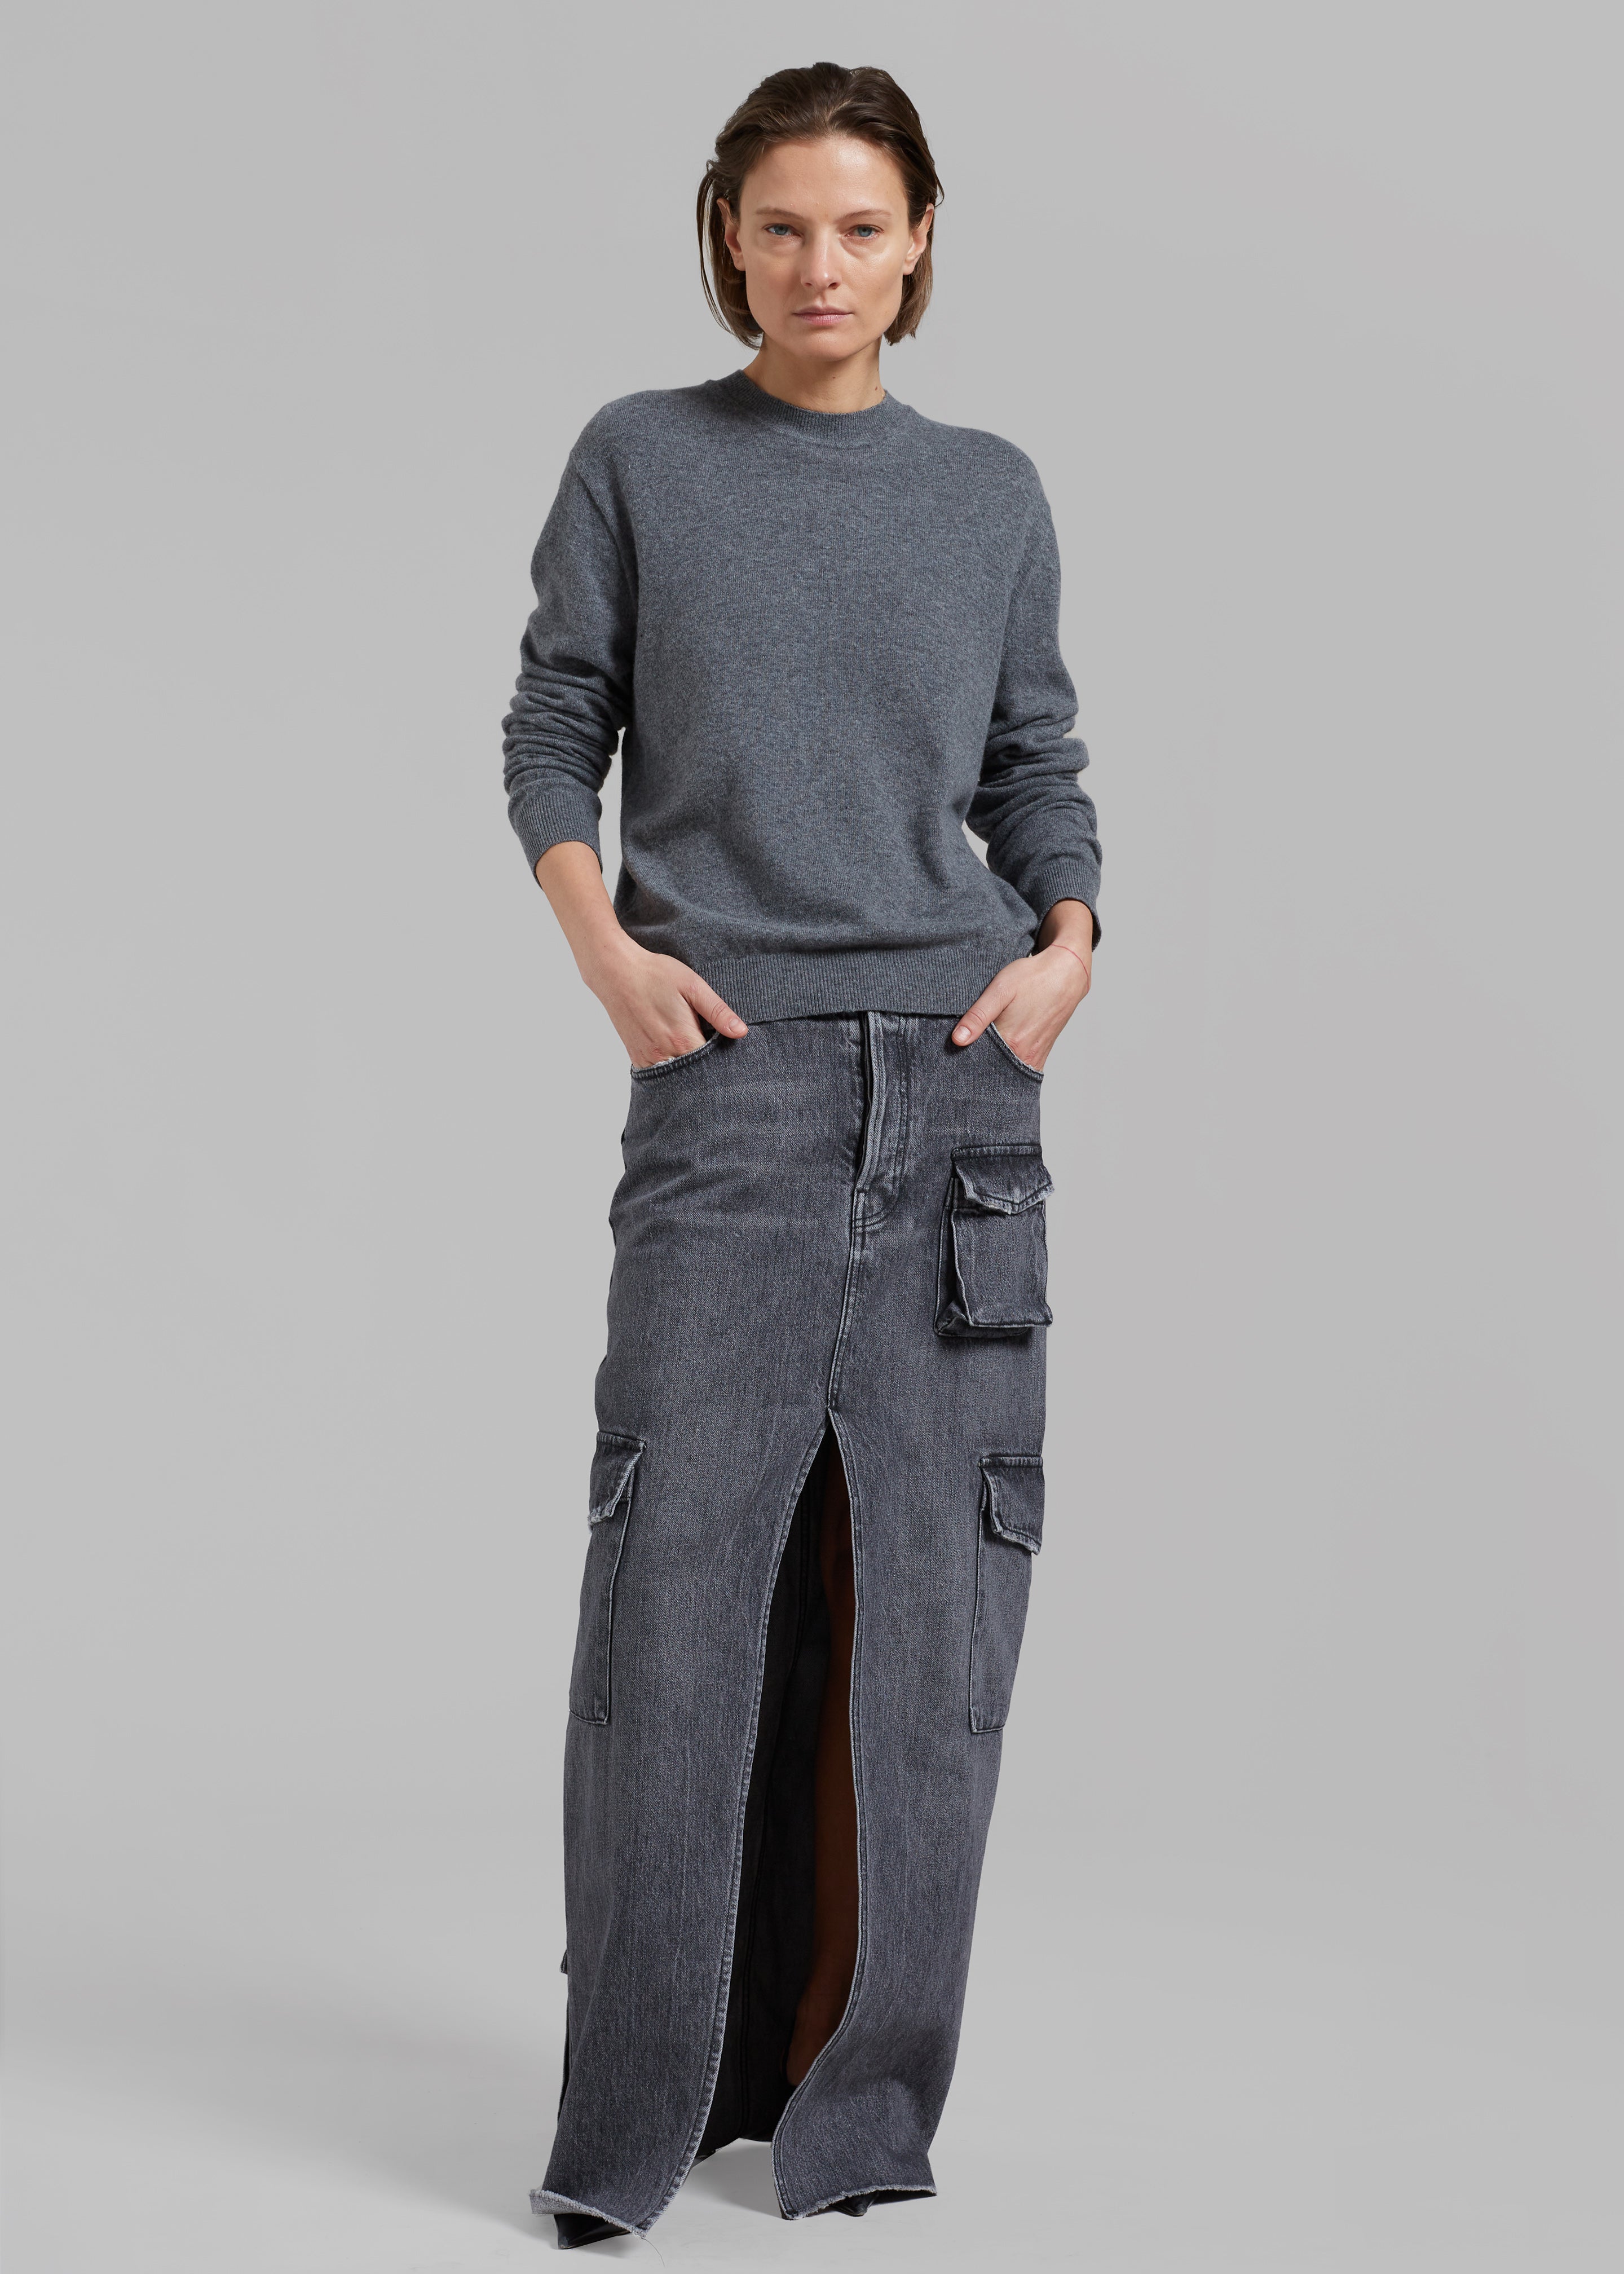 Aurora Wool Blend Knit Sweater - Grey - 8